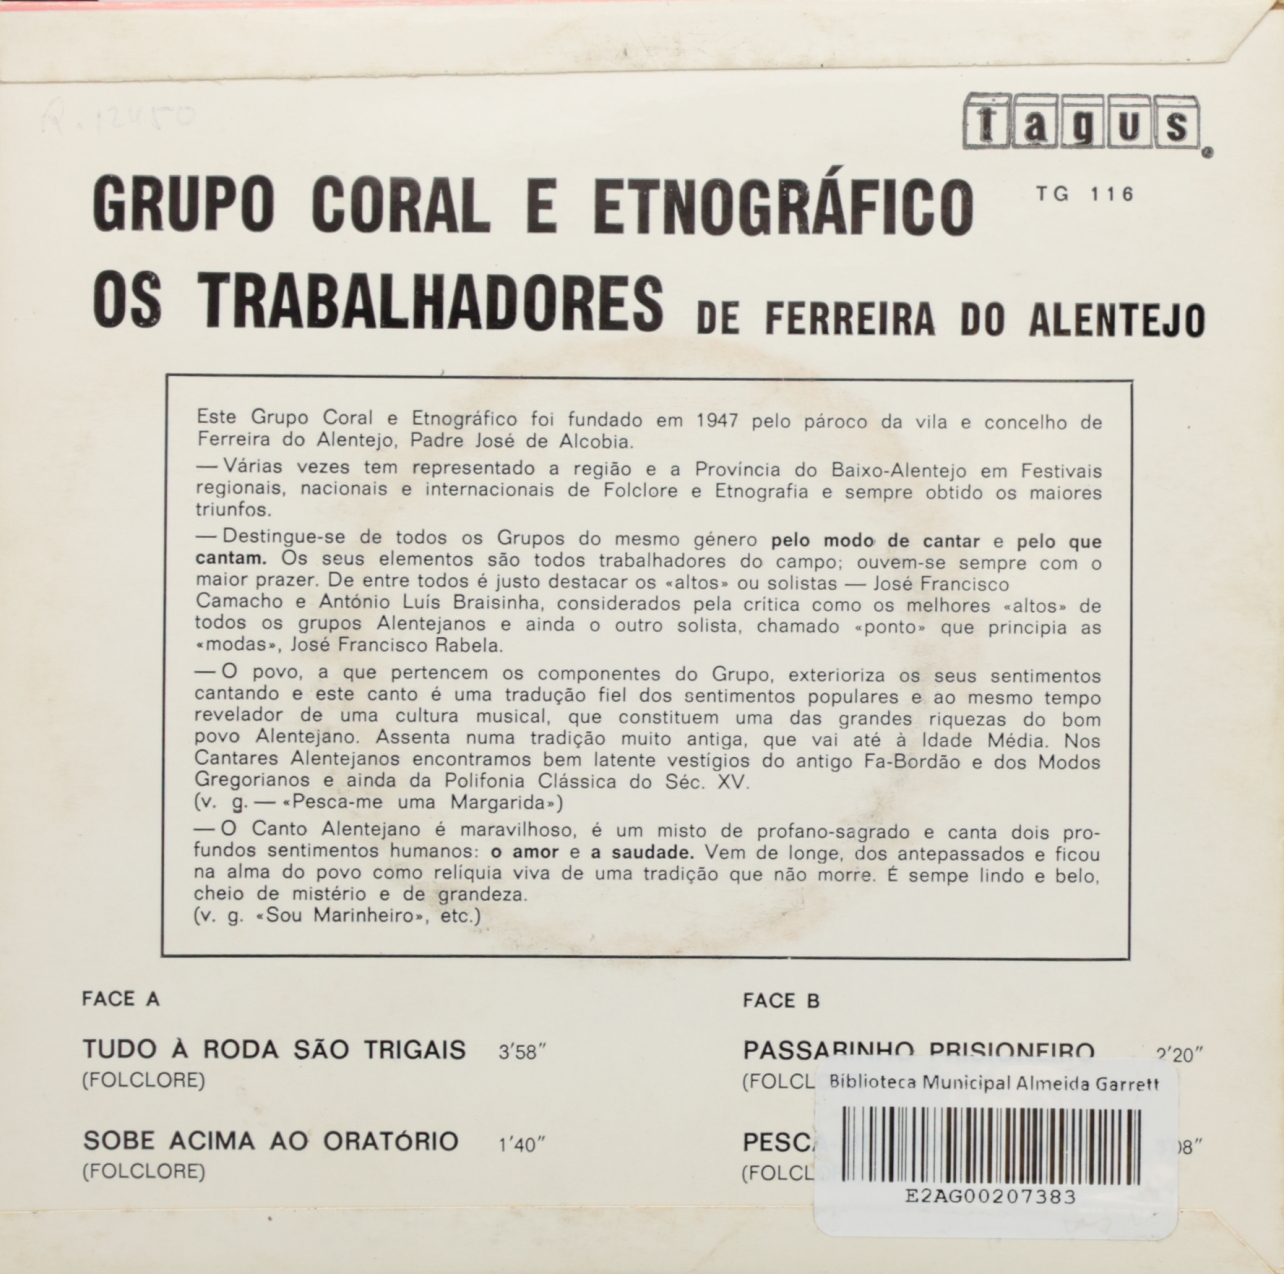 Grupo Coral e Etnográfico Os Trabalhadores de Ferreira do Alentejo